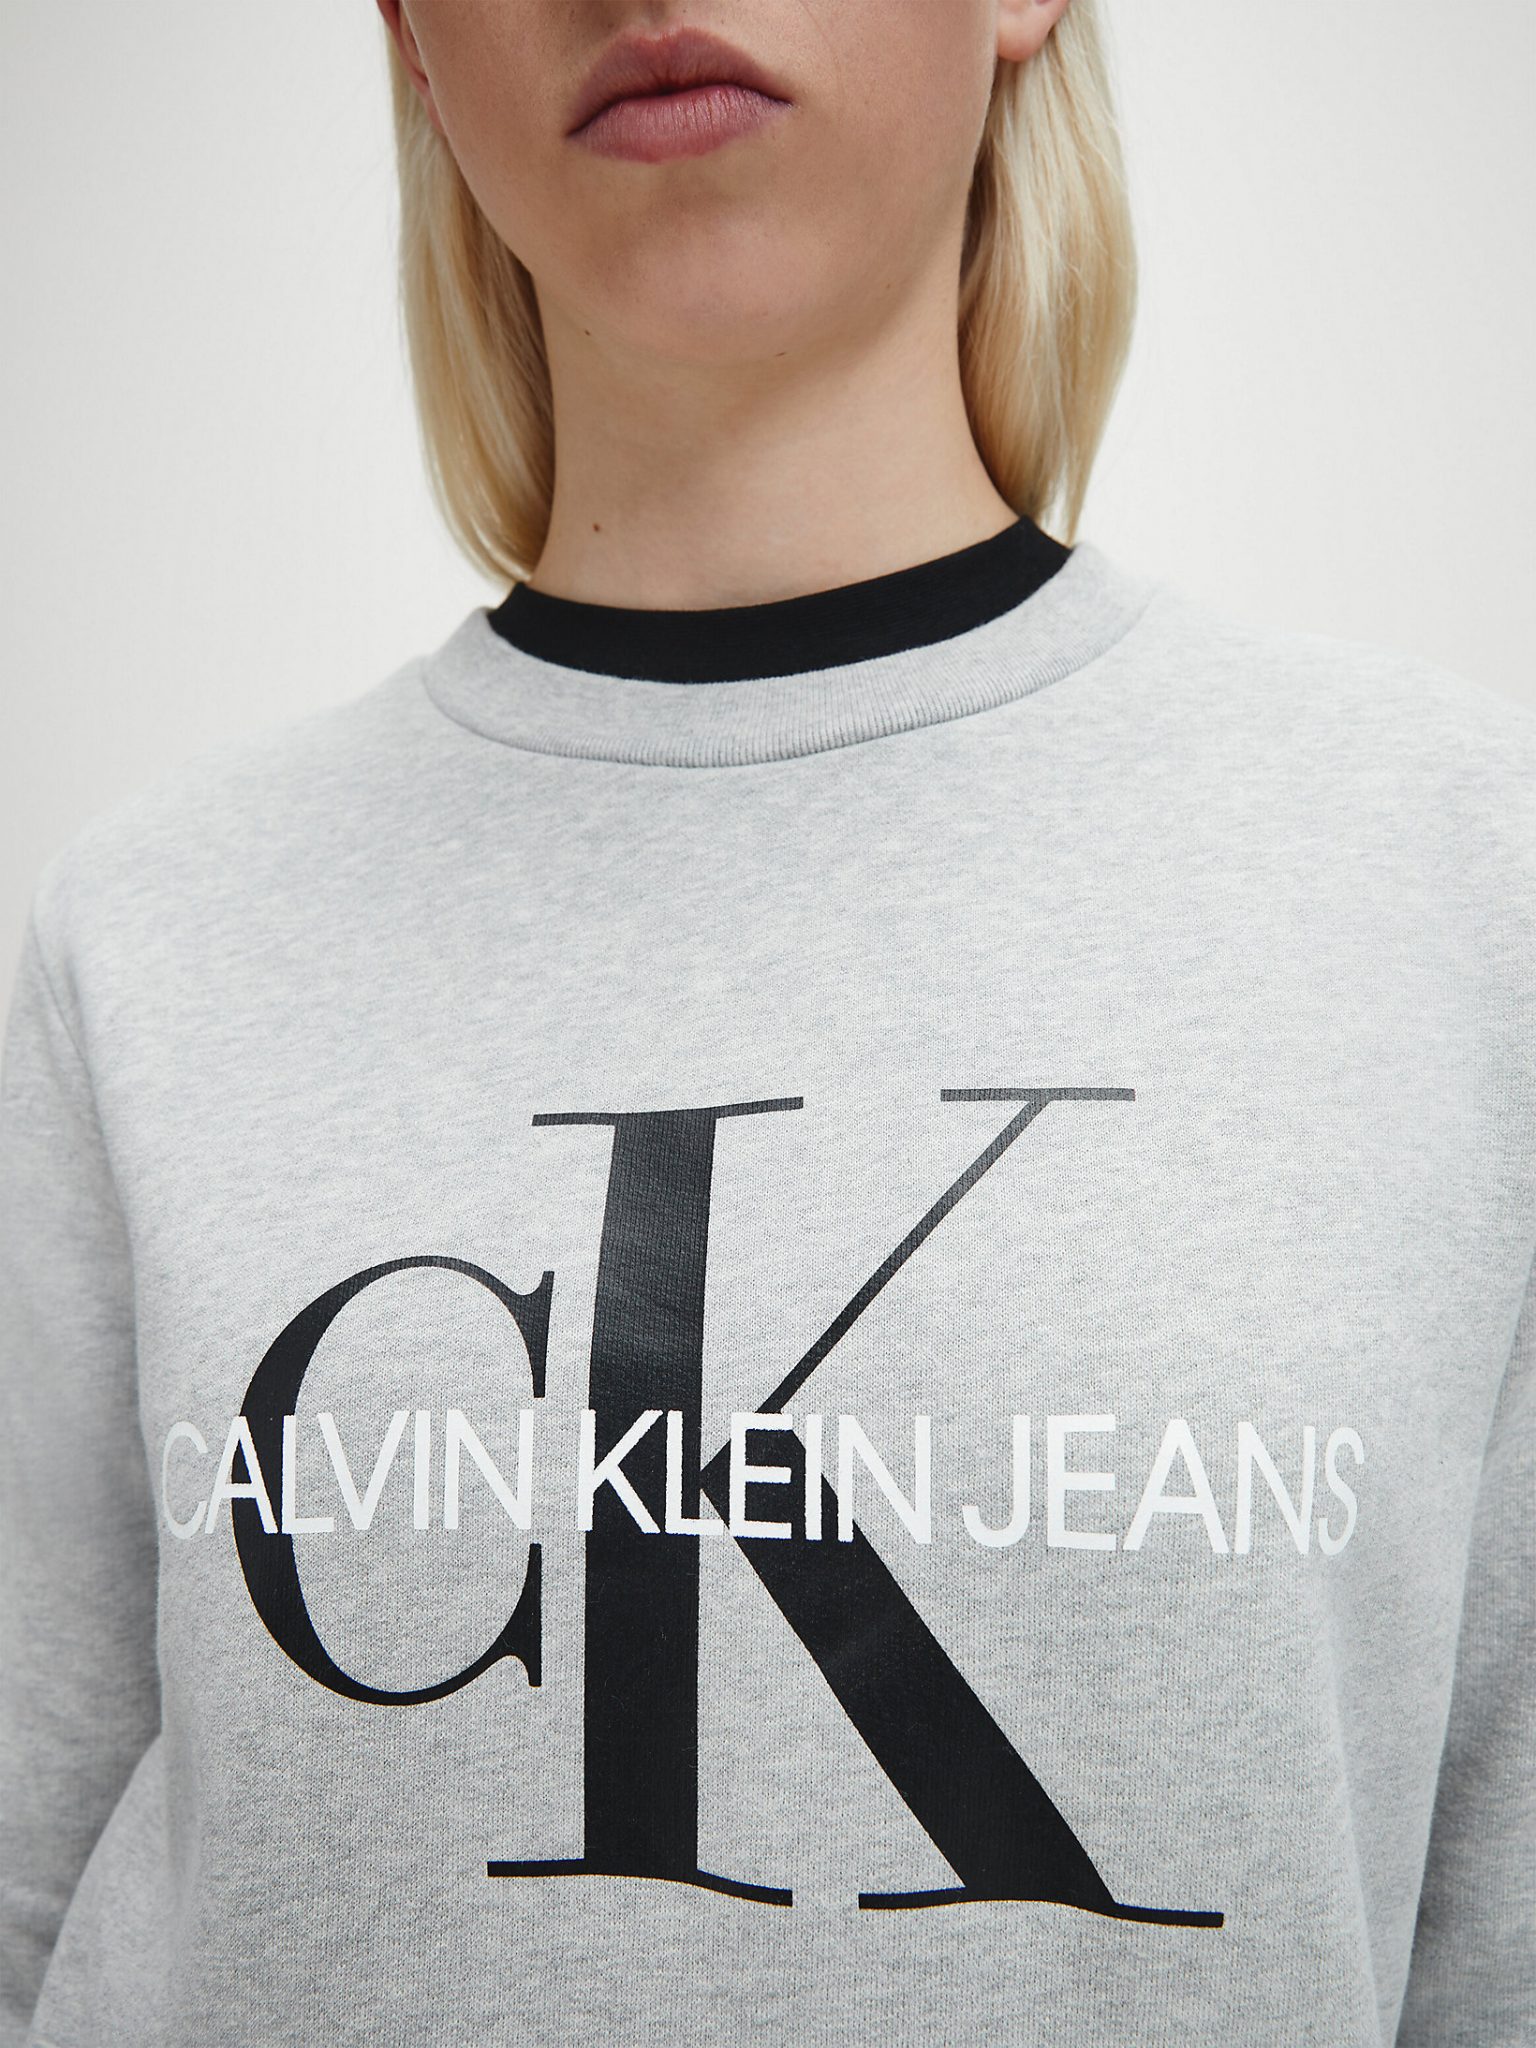 $42 Calvin Klein Men's Black Short-Sleeve Crewneck Monogram Logo T